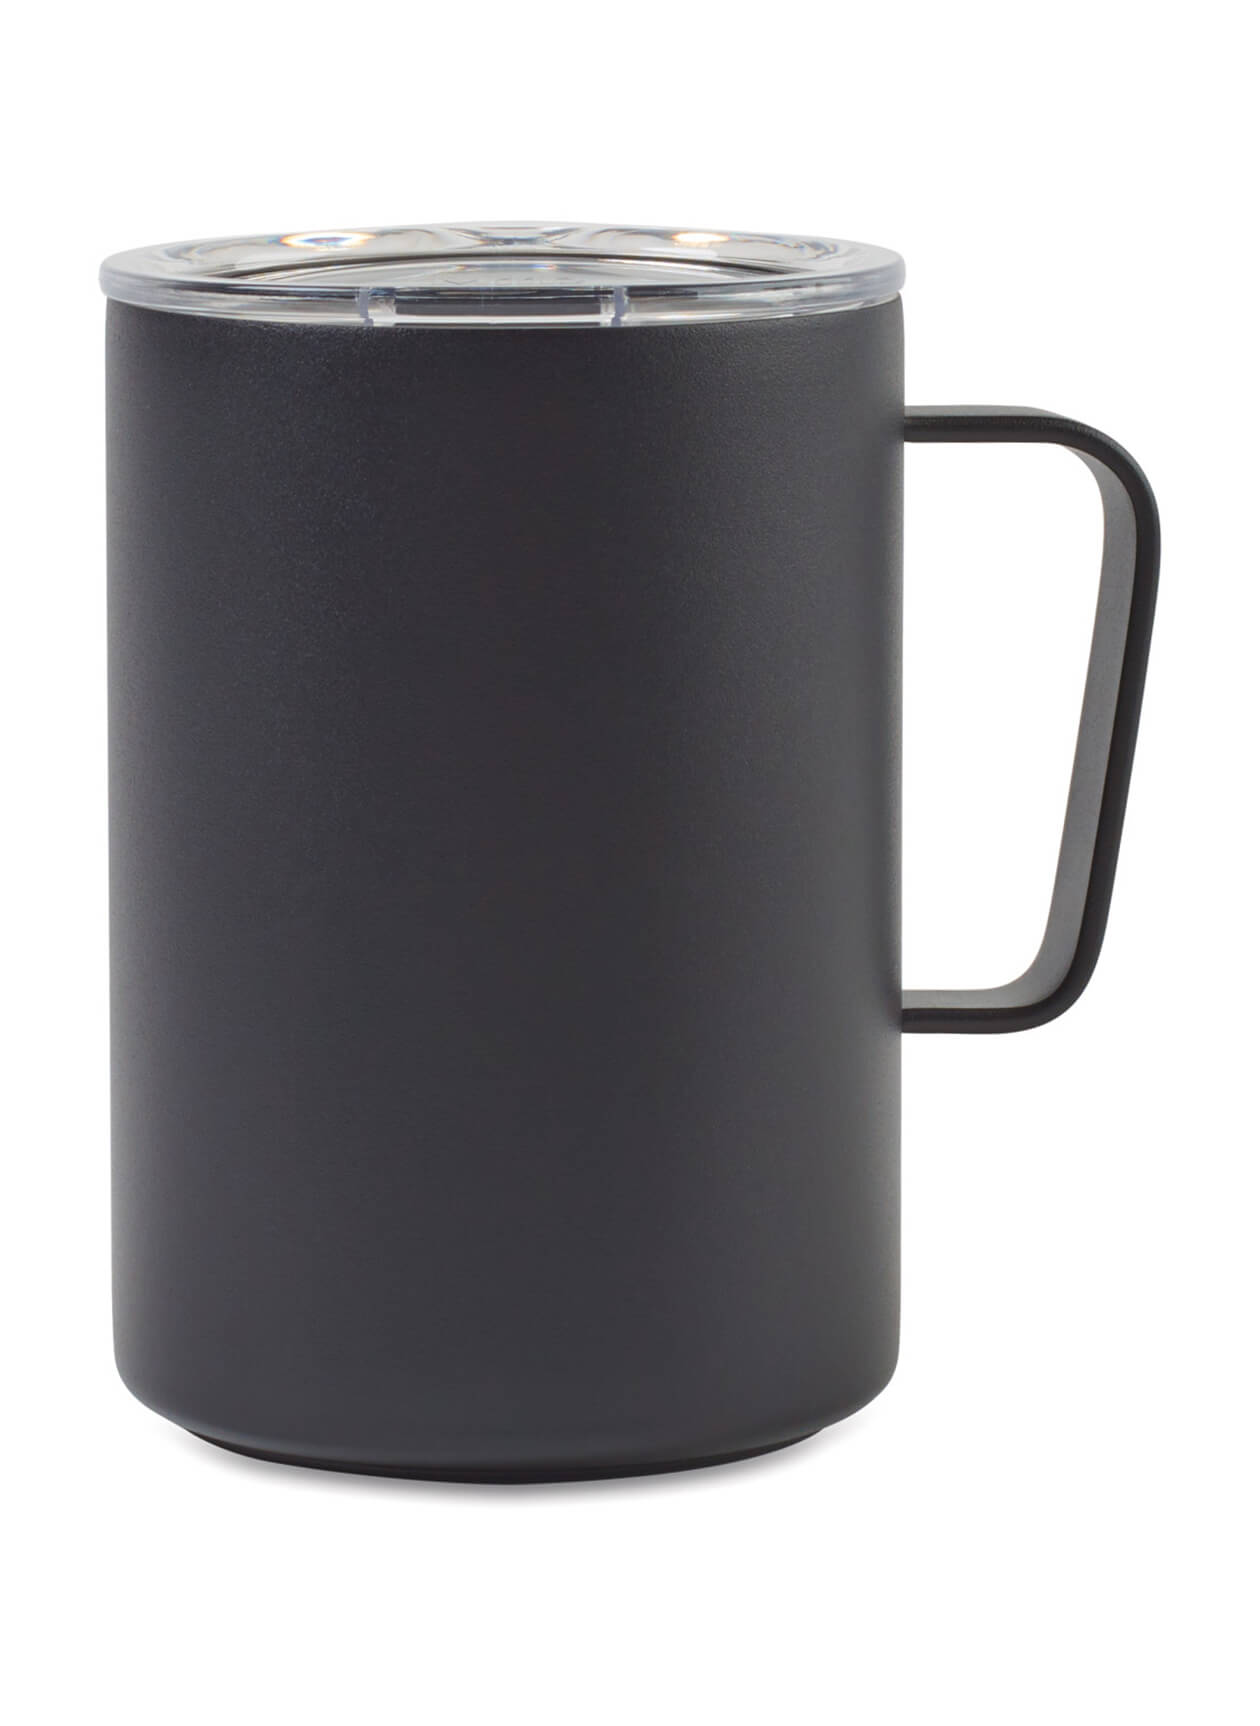 Miir Black Powder Vacuum Insulated Camp Cup - 16 oz